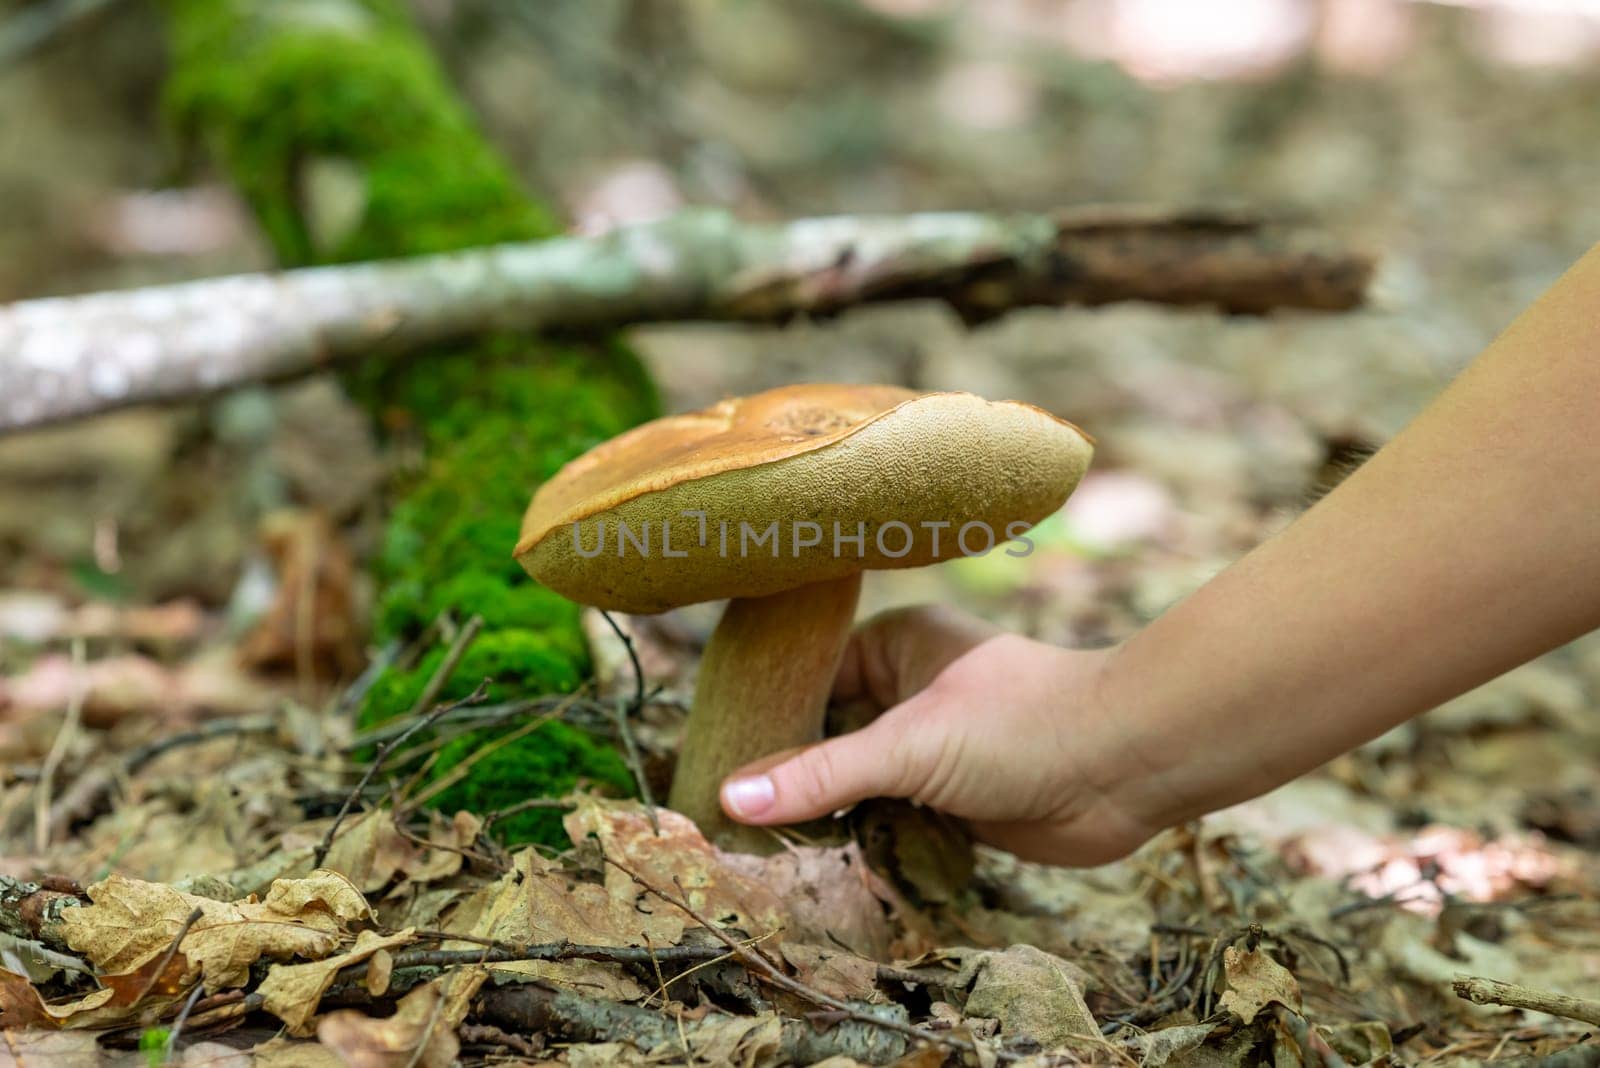 Picking white mushrooms in autumn